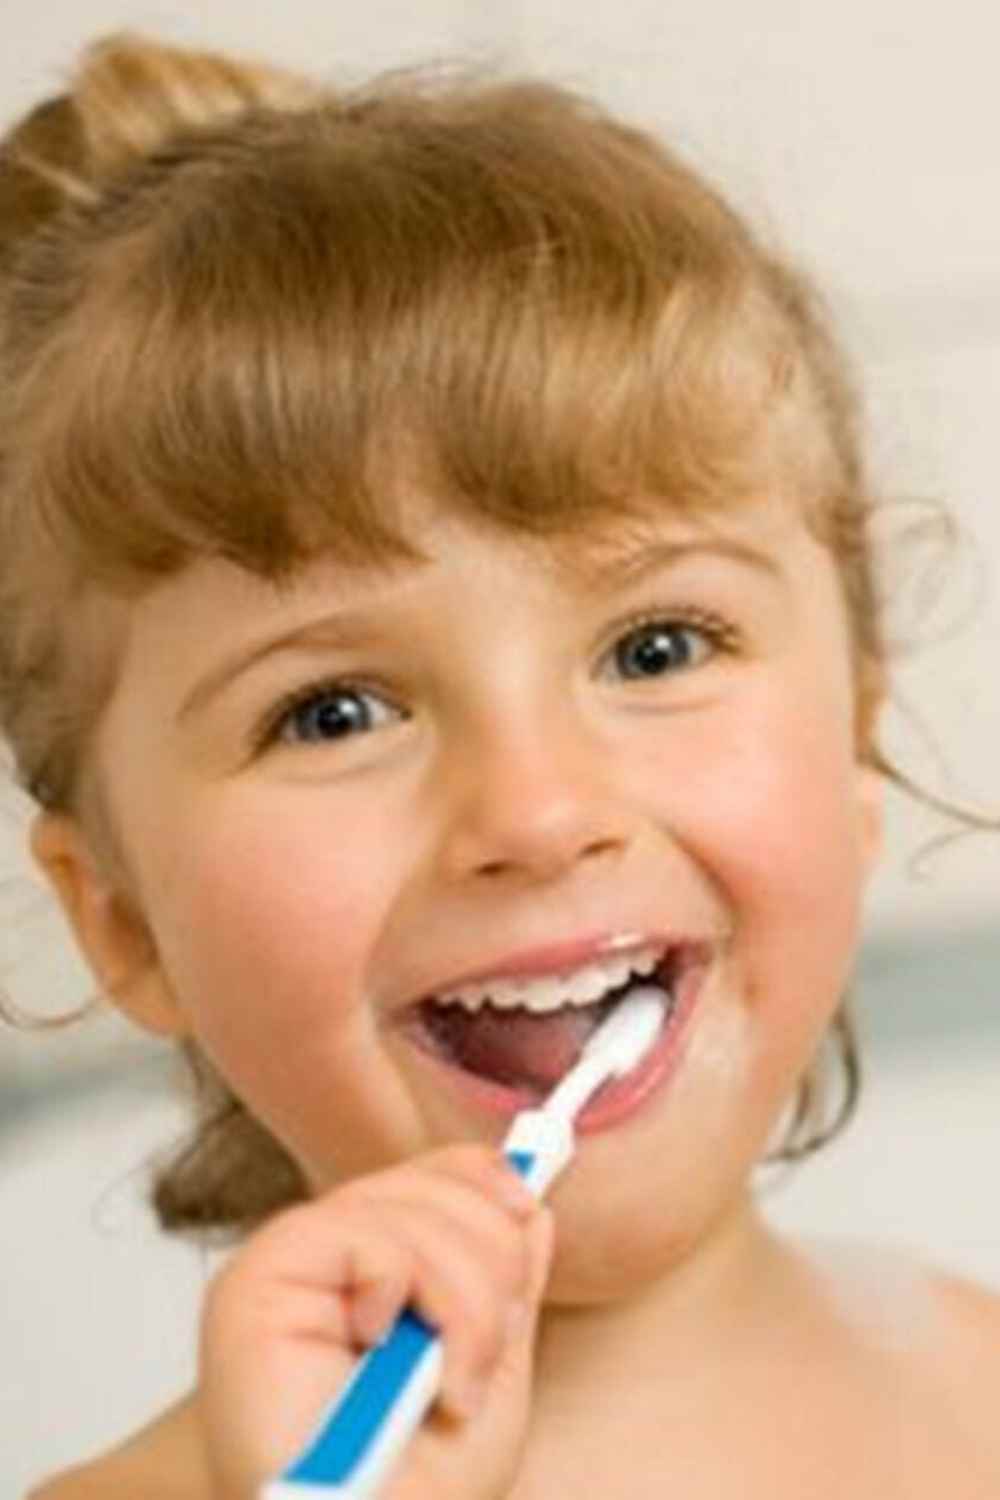 child with dental phobia